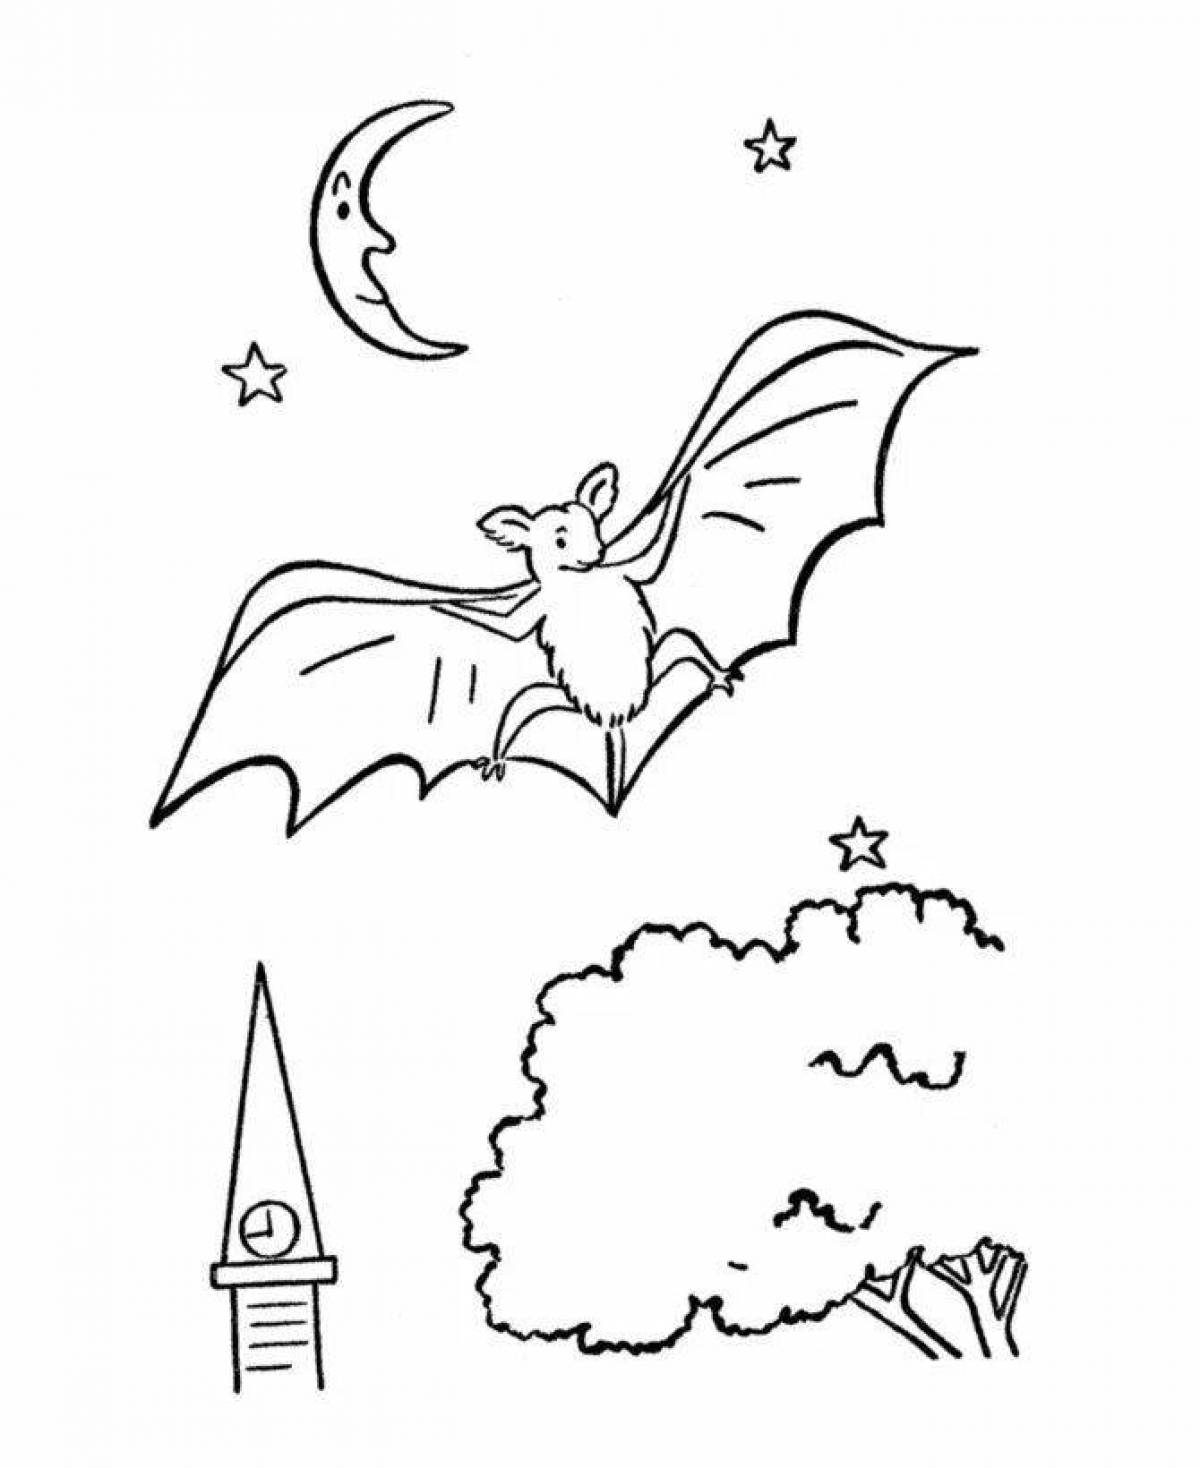 Joyful bat coloring pages for kids